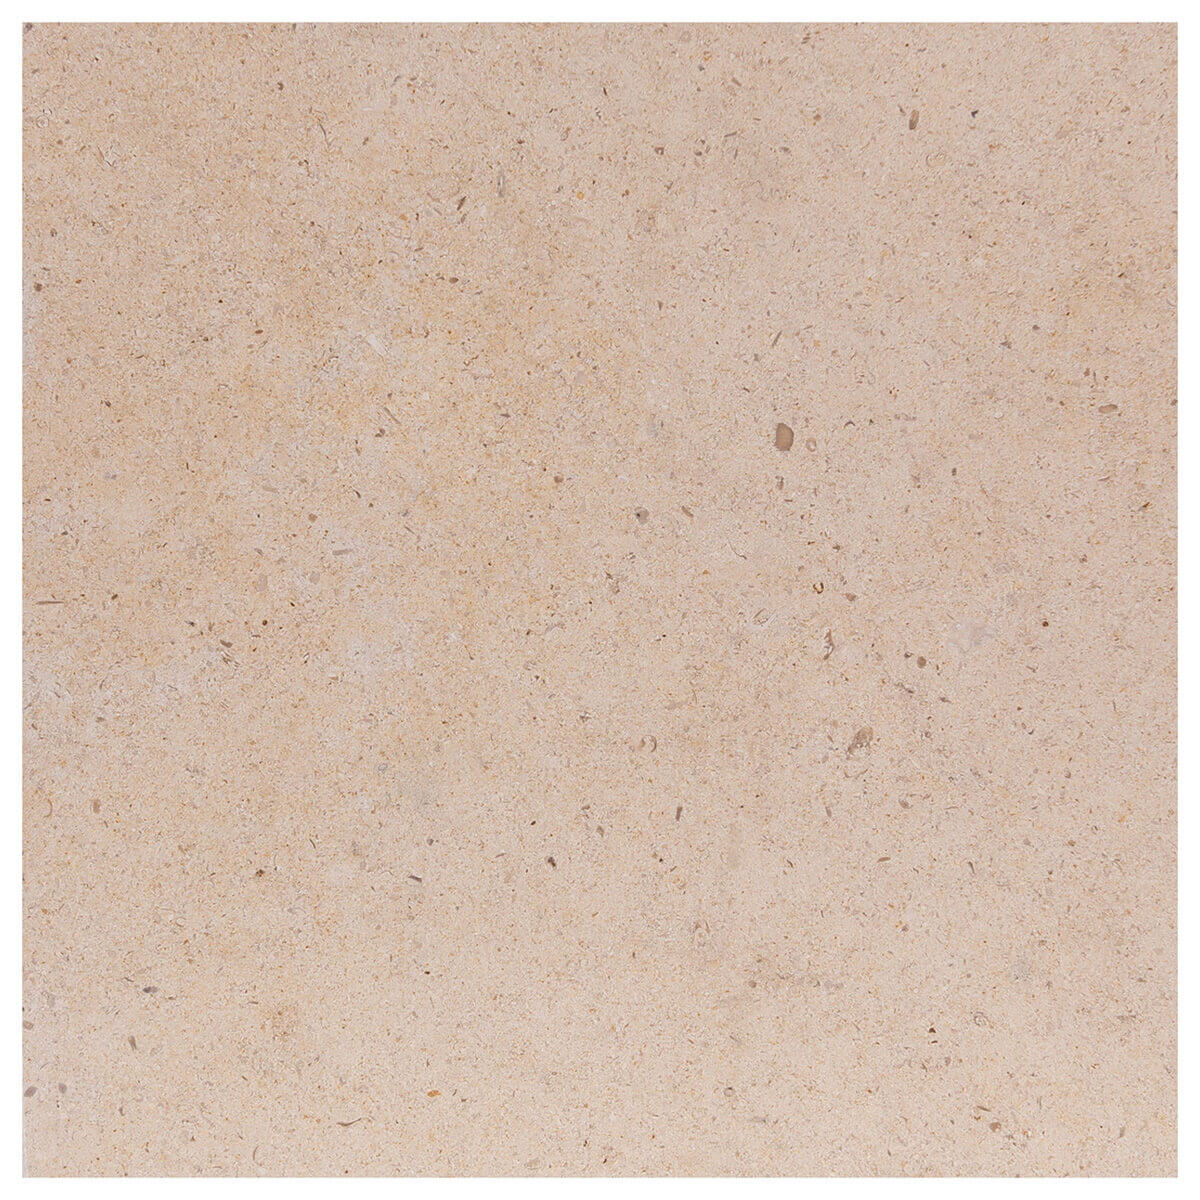 haussmann corton beige limestone square natural stone field tile 12x12 honed